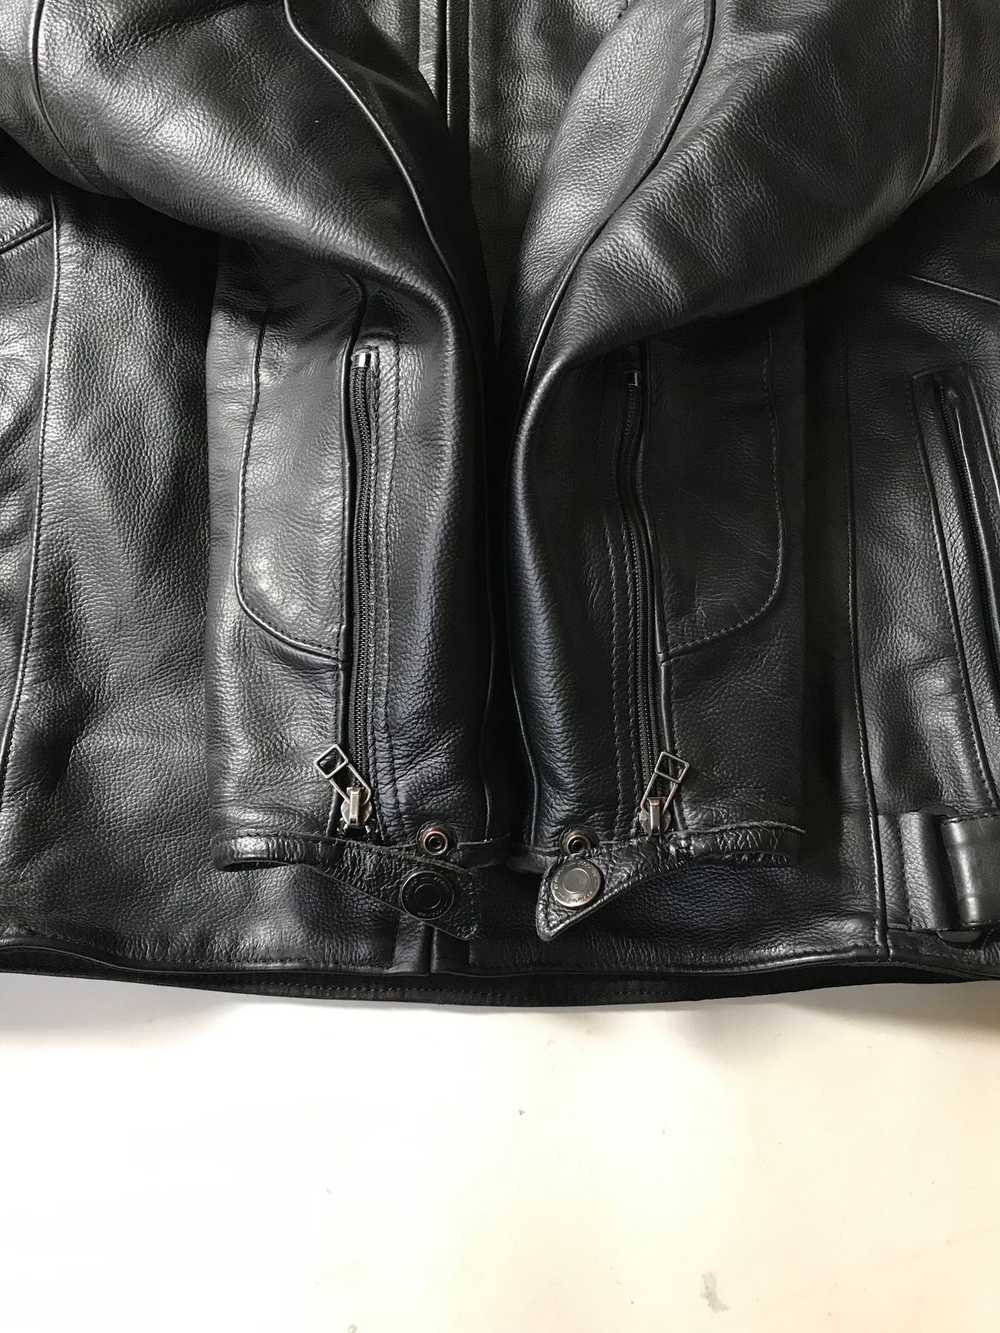 Dainese Dainese Two Tone Leather Motorcycle Jacket - image 8